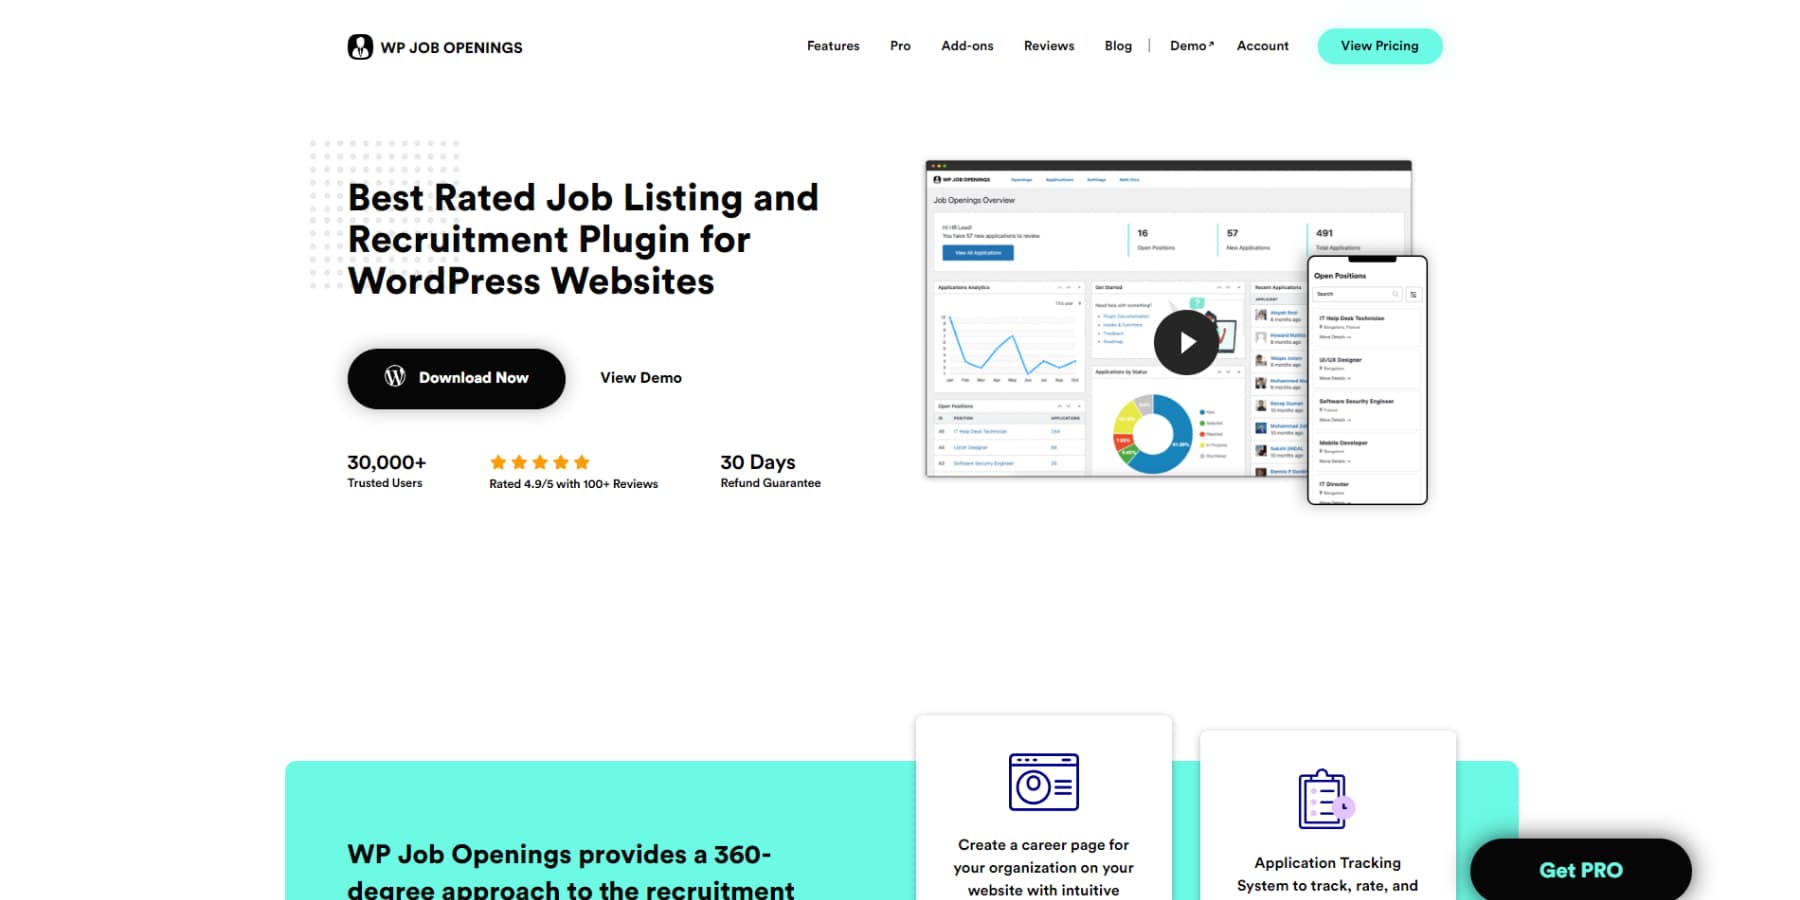 A screenshot of WP Job Openings' homepage